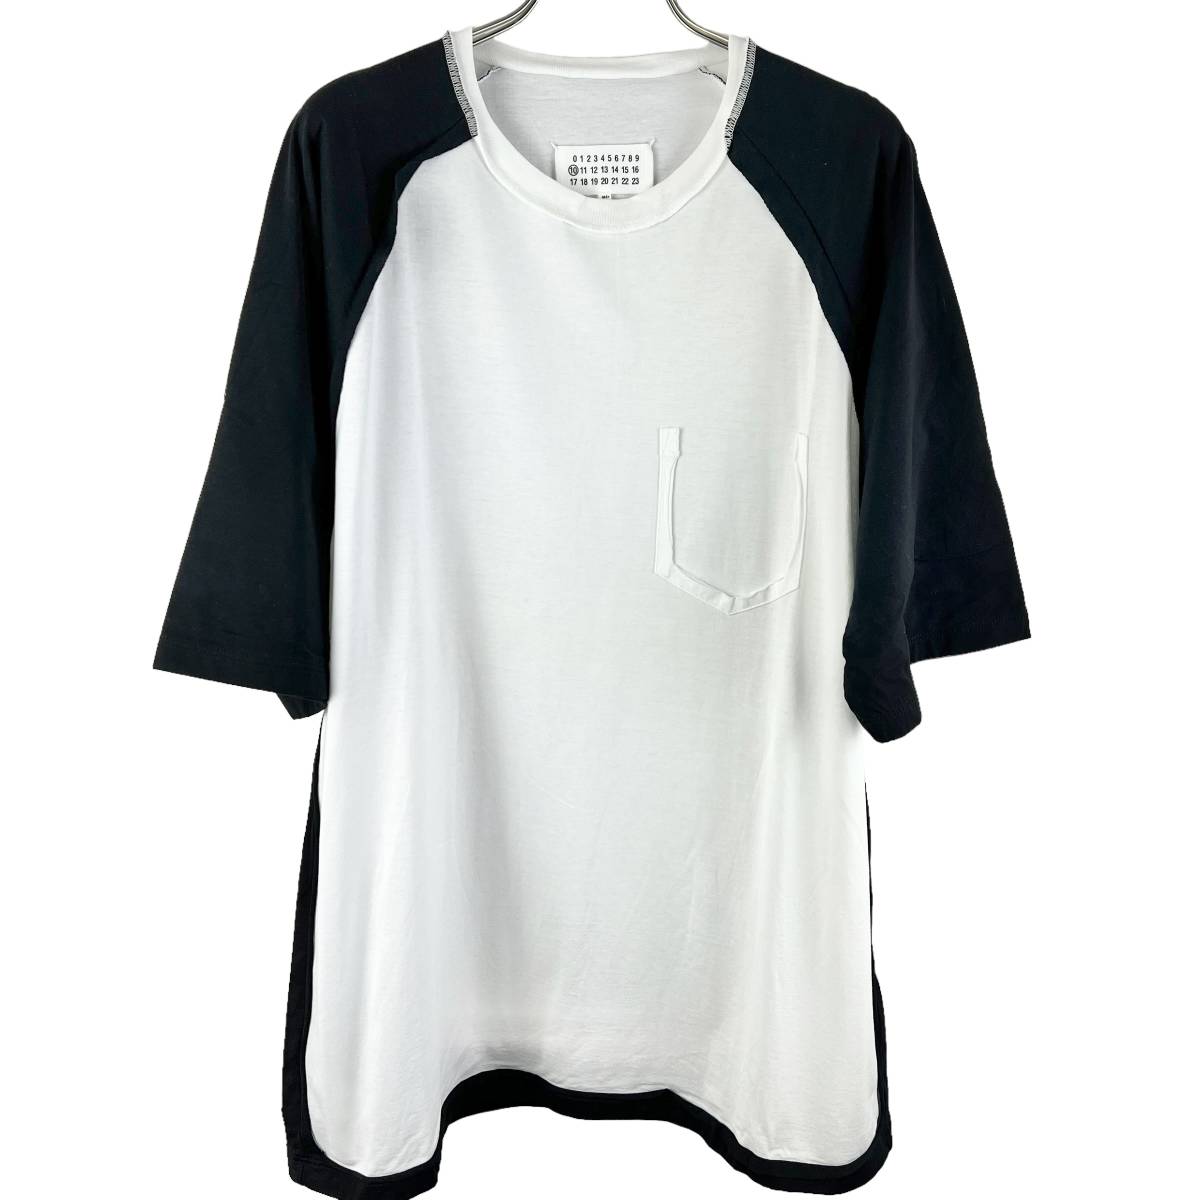 Maison Margiela (メゾン マルジェラ) Reconstructed Pocket T Shirt (white)